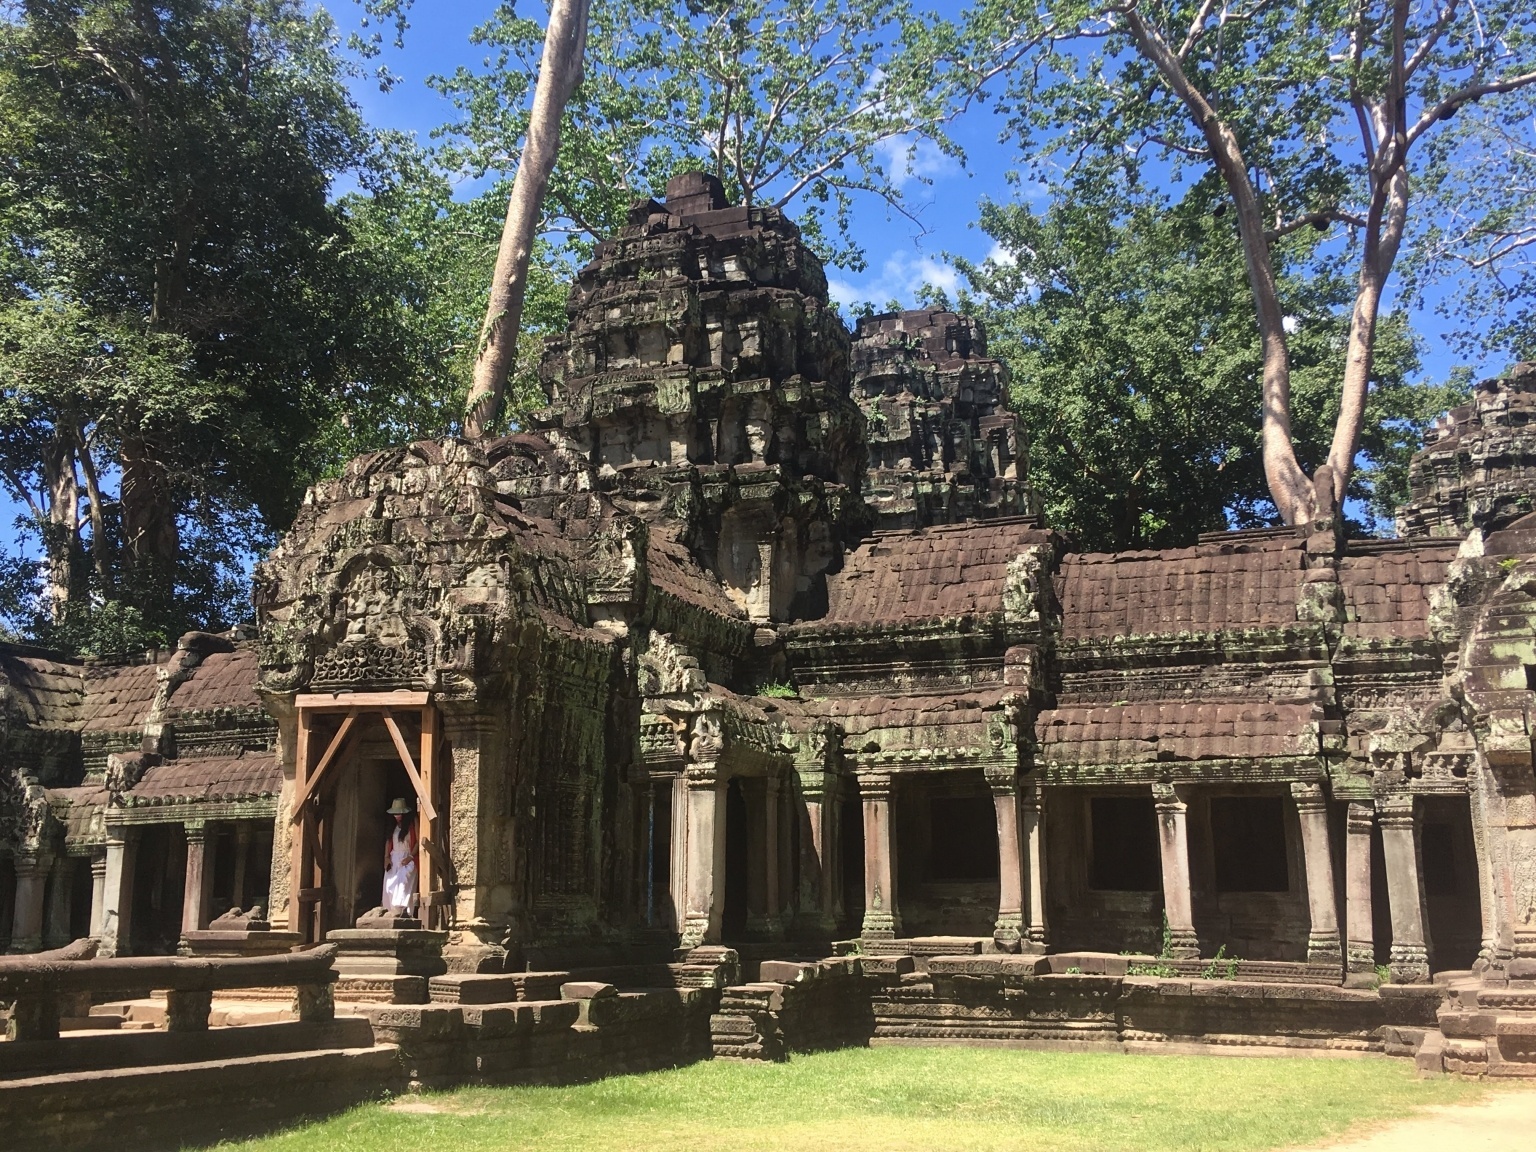 معبد تاپروم کامبوج